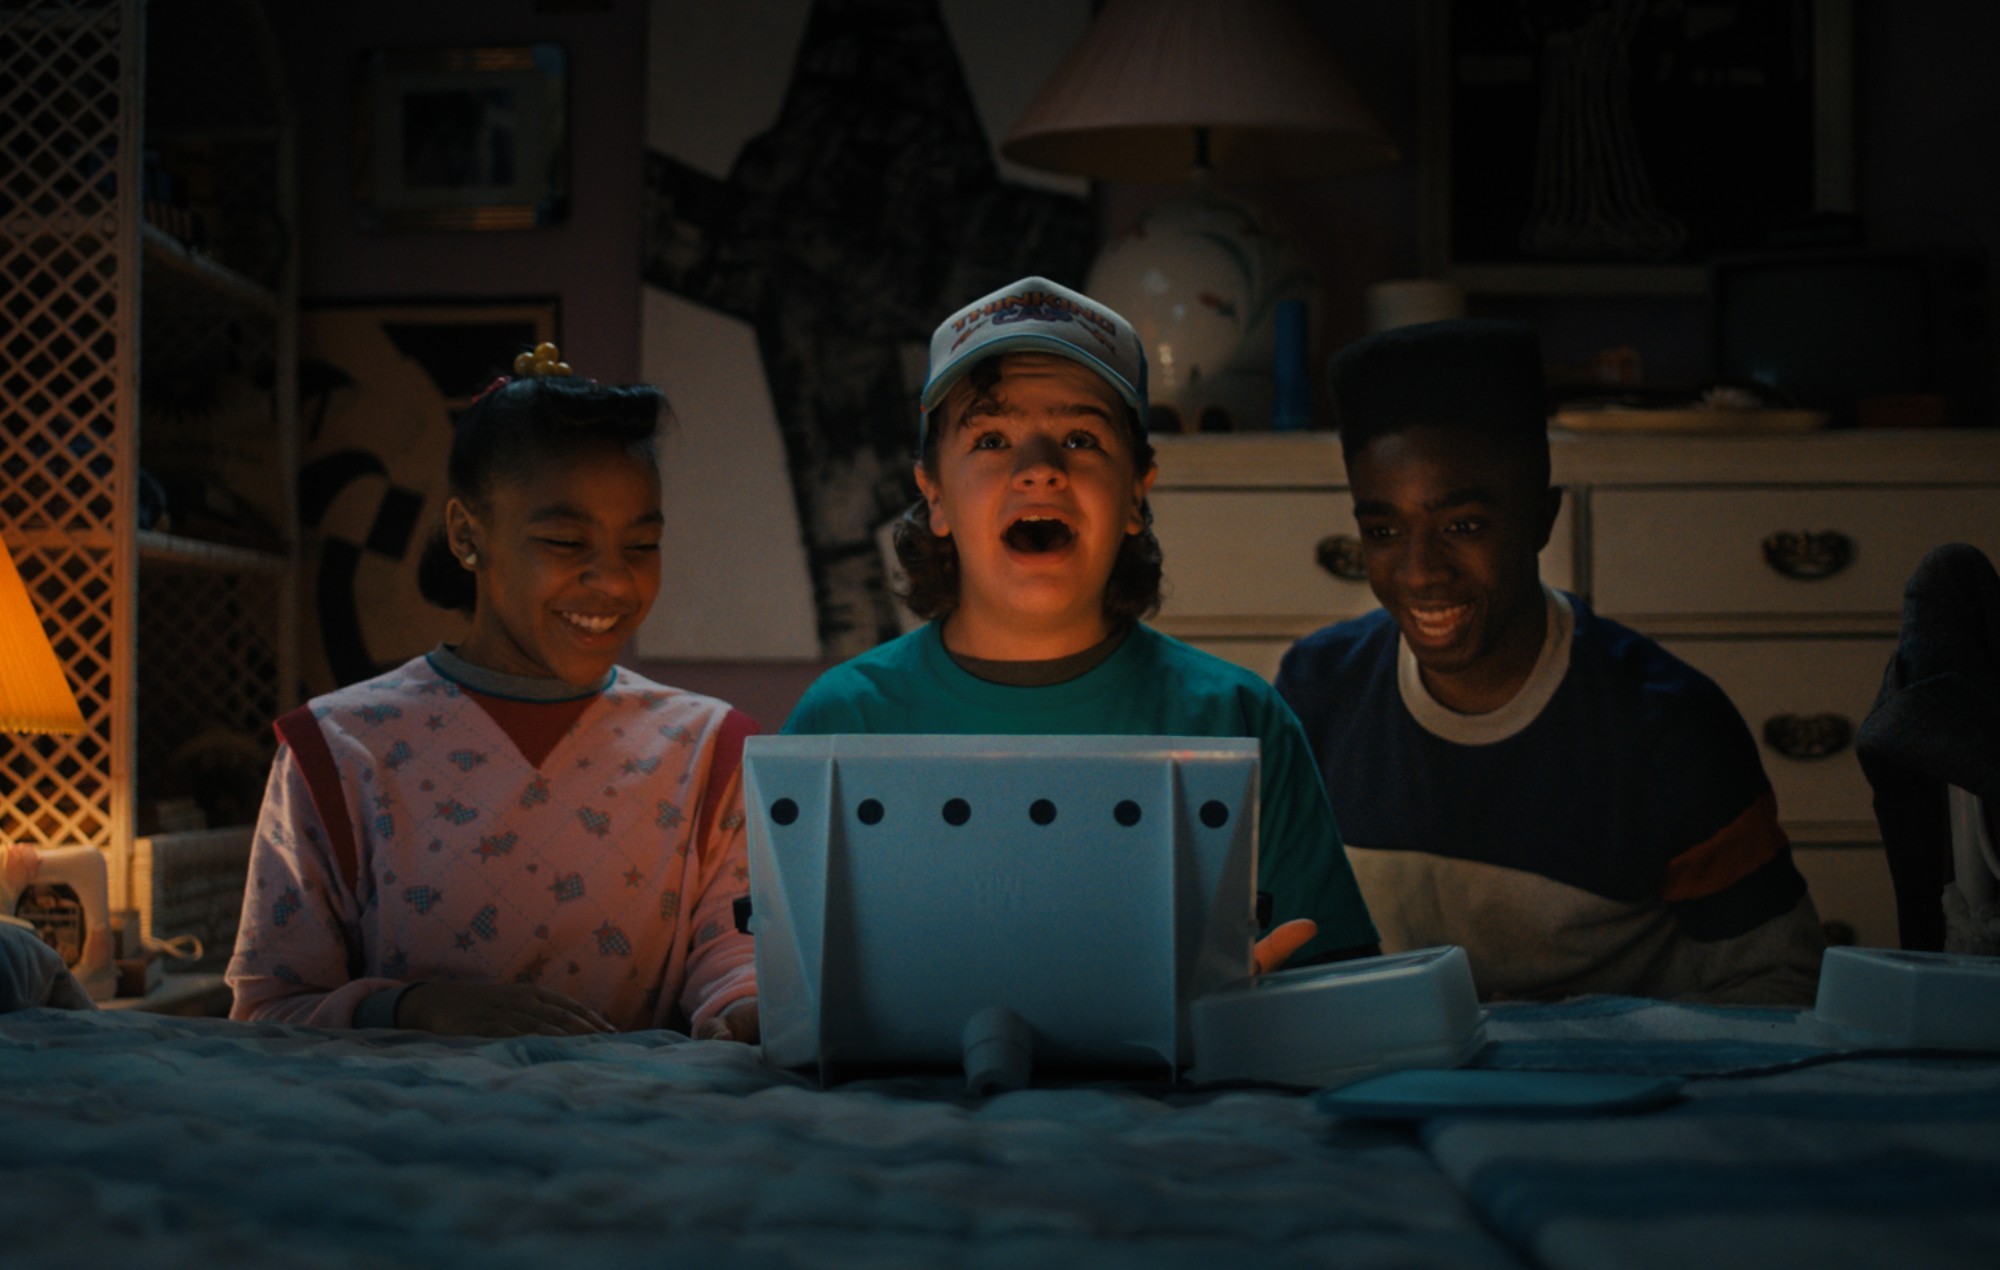 Da sinistra: Erica Sinclair (Priah Ferguson), Dustin (Gaten Matarazzo) e Lucas (Caleb McLaughlin) in una scena di “Stranger Things 4”. Credits: Courtesy of Netflix.